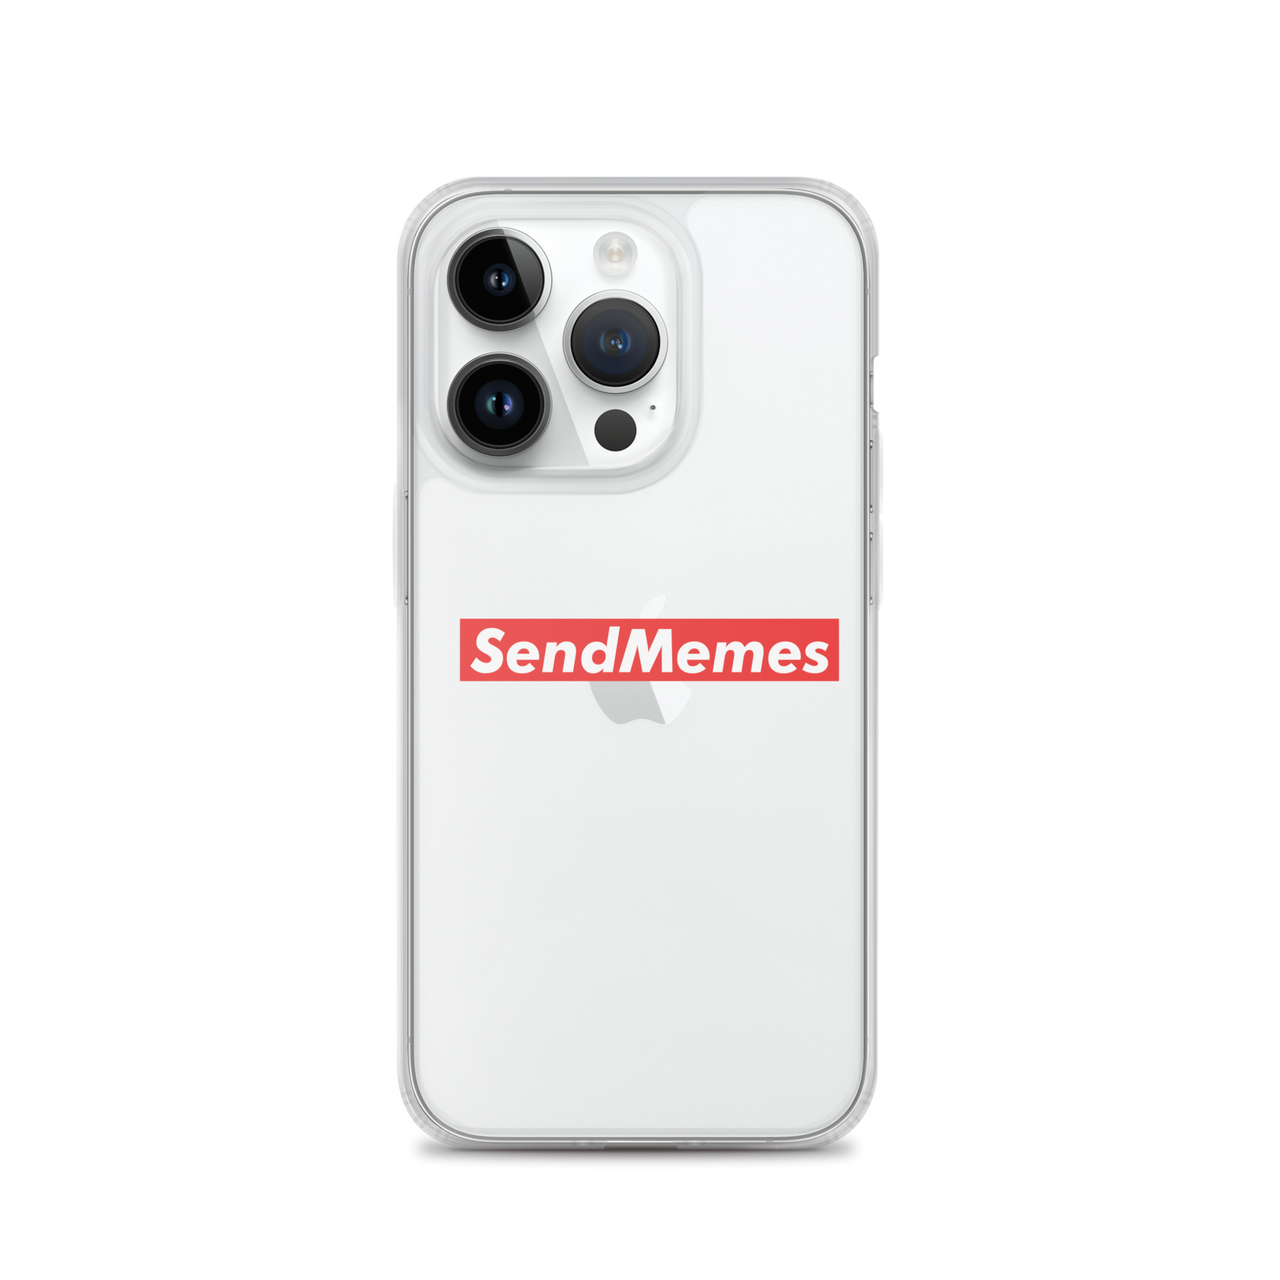 send memes iPhone case